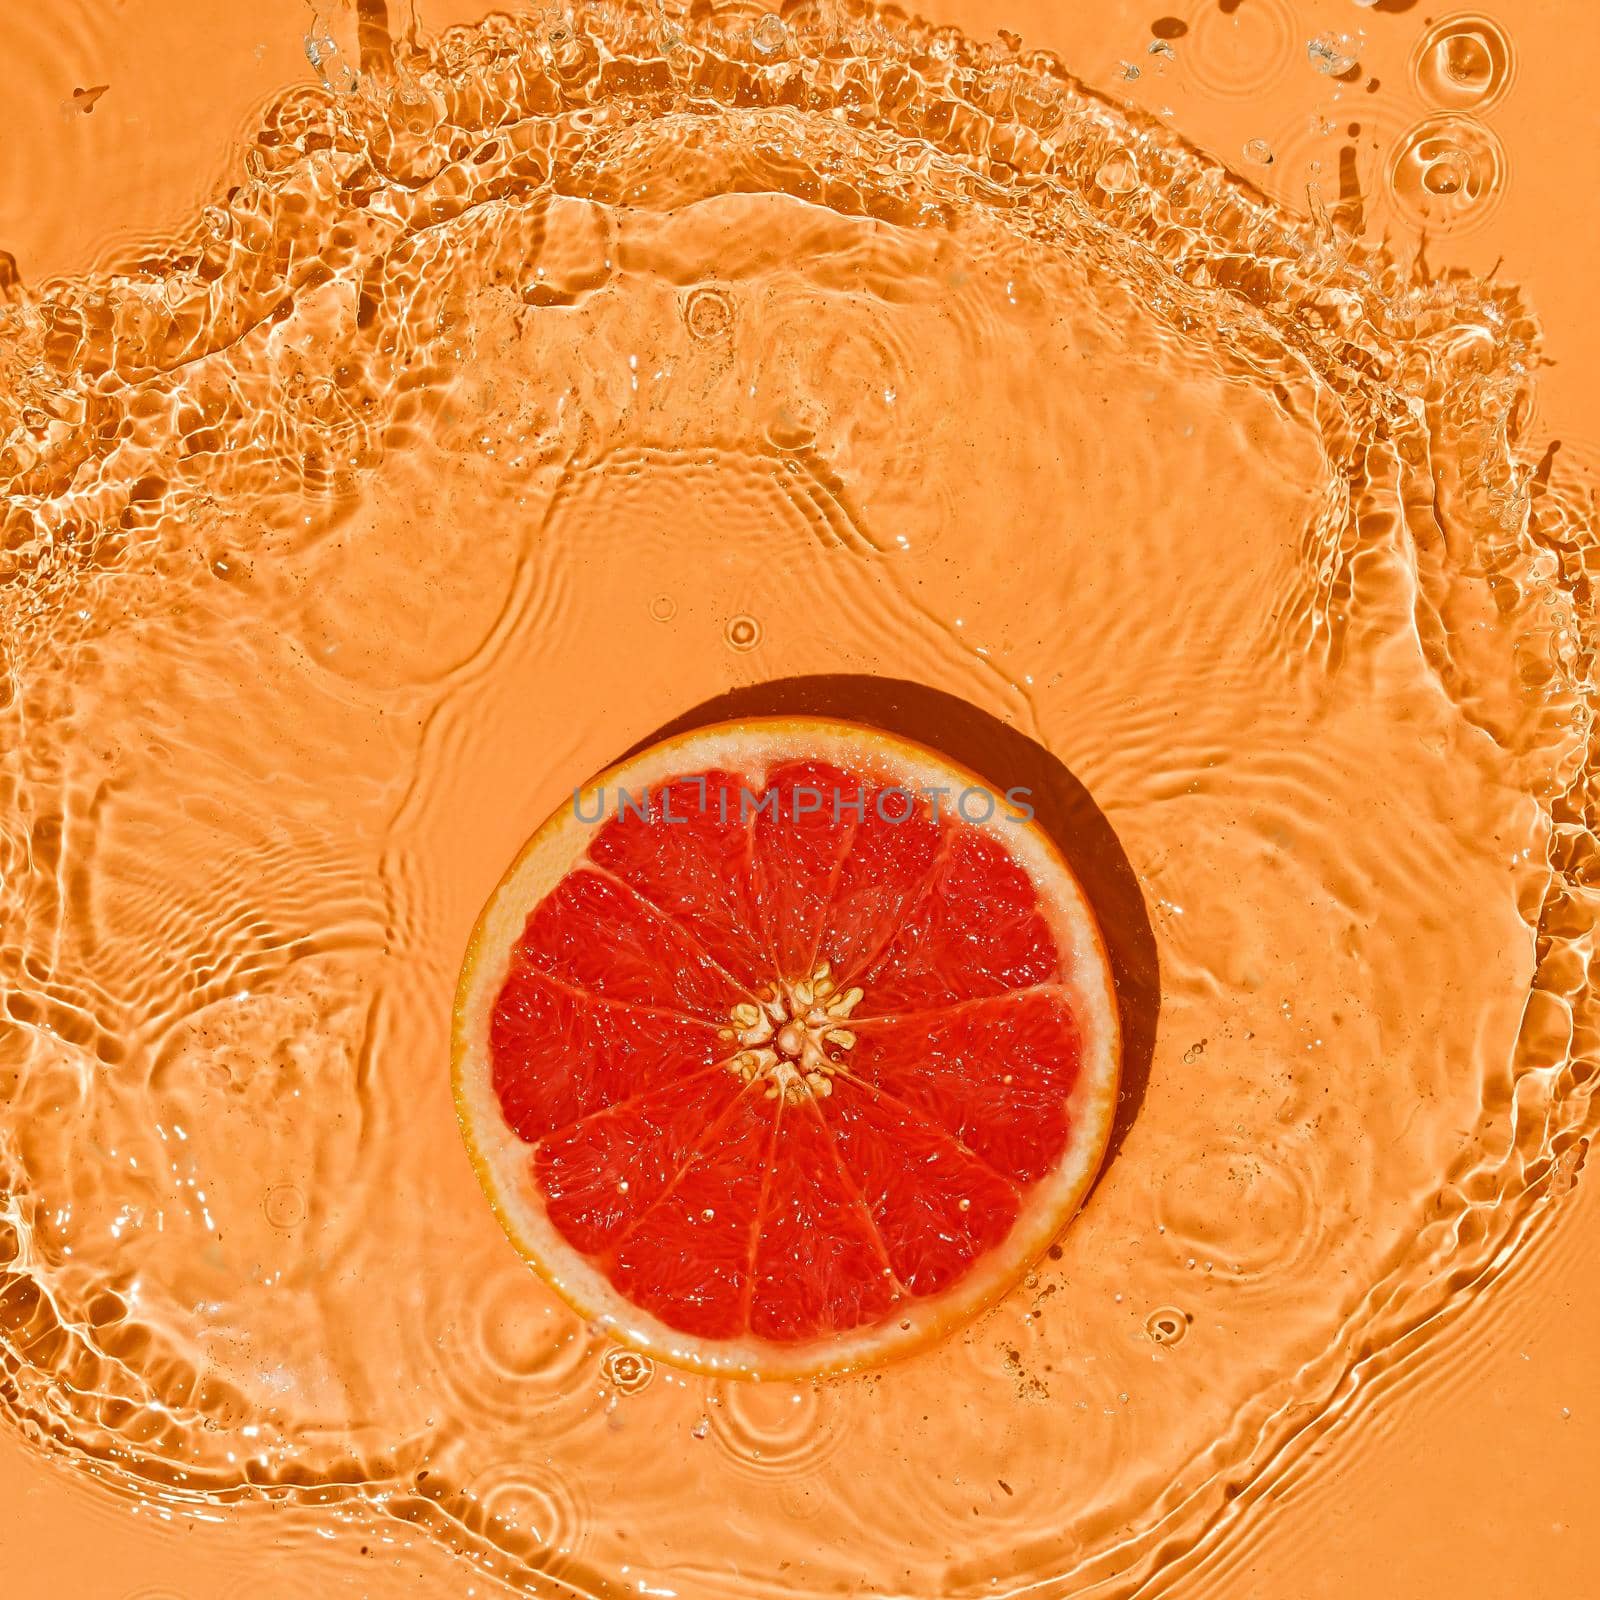 Summer fruit concept citrus red grapefruit on a bright orange background with splashes. by sergii_gnatiuk